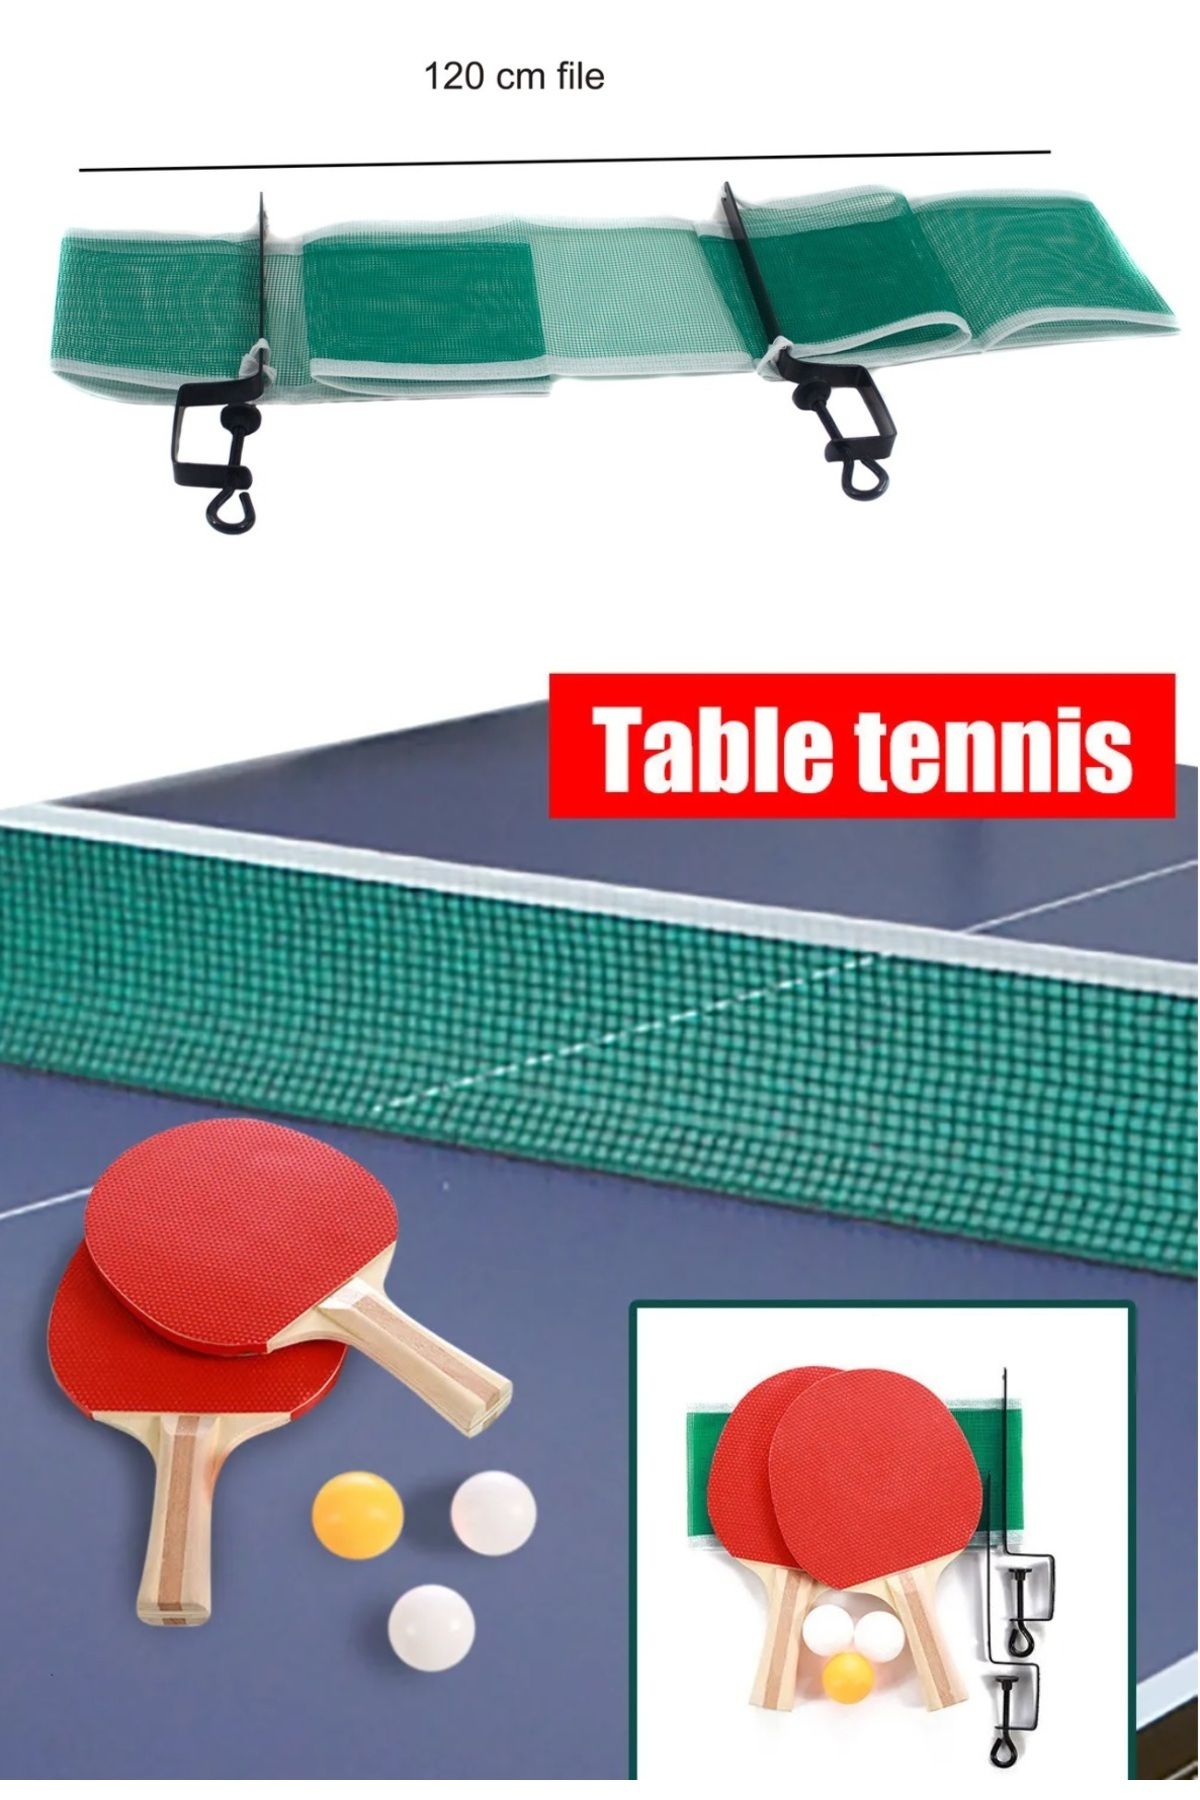 Xolo Masa Tenisi Raketi Seti 7 Parça Tenis Topu Fileli Set Başlangıç Seti